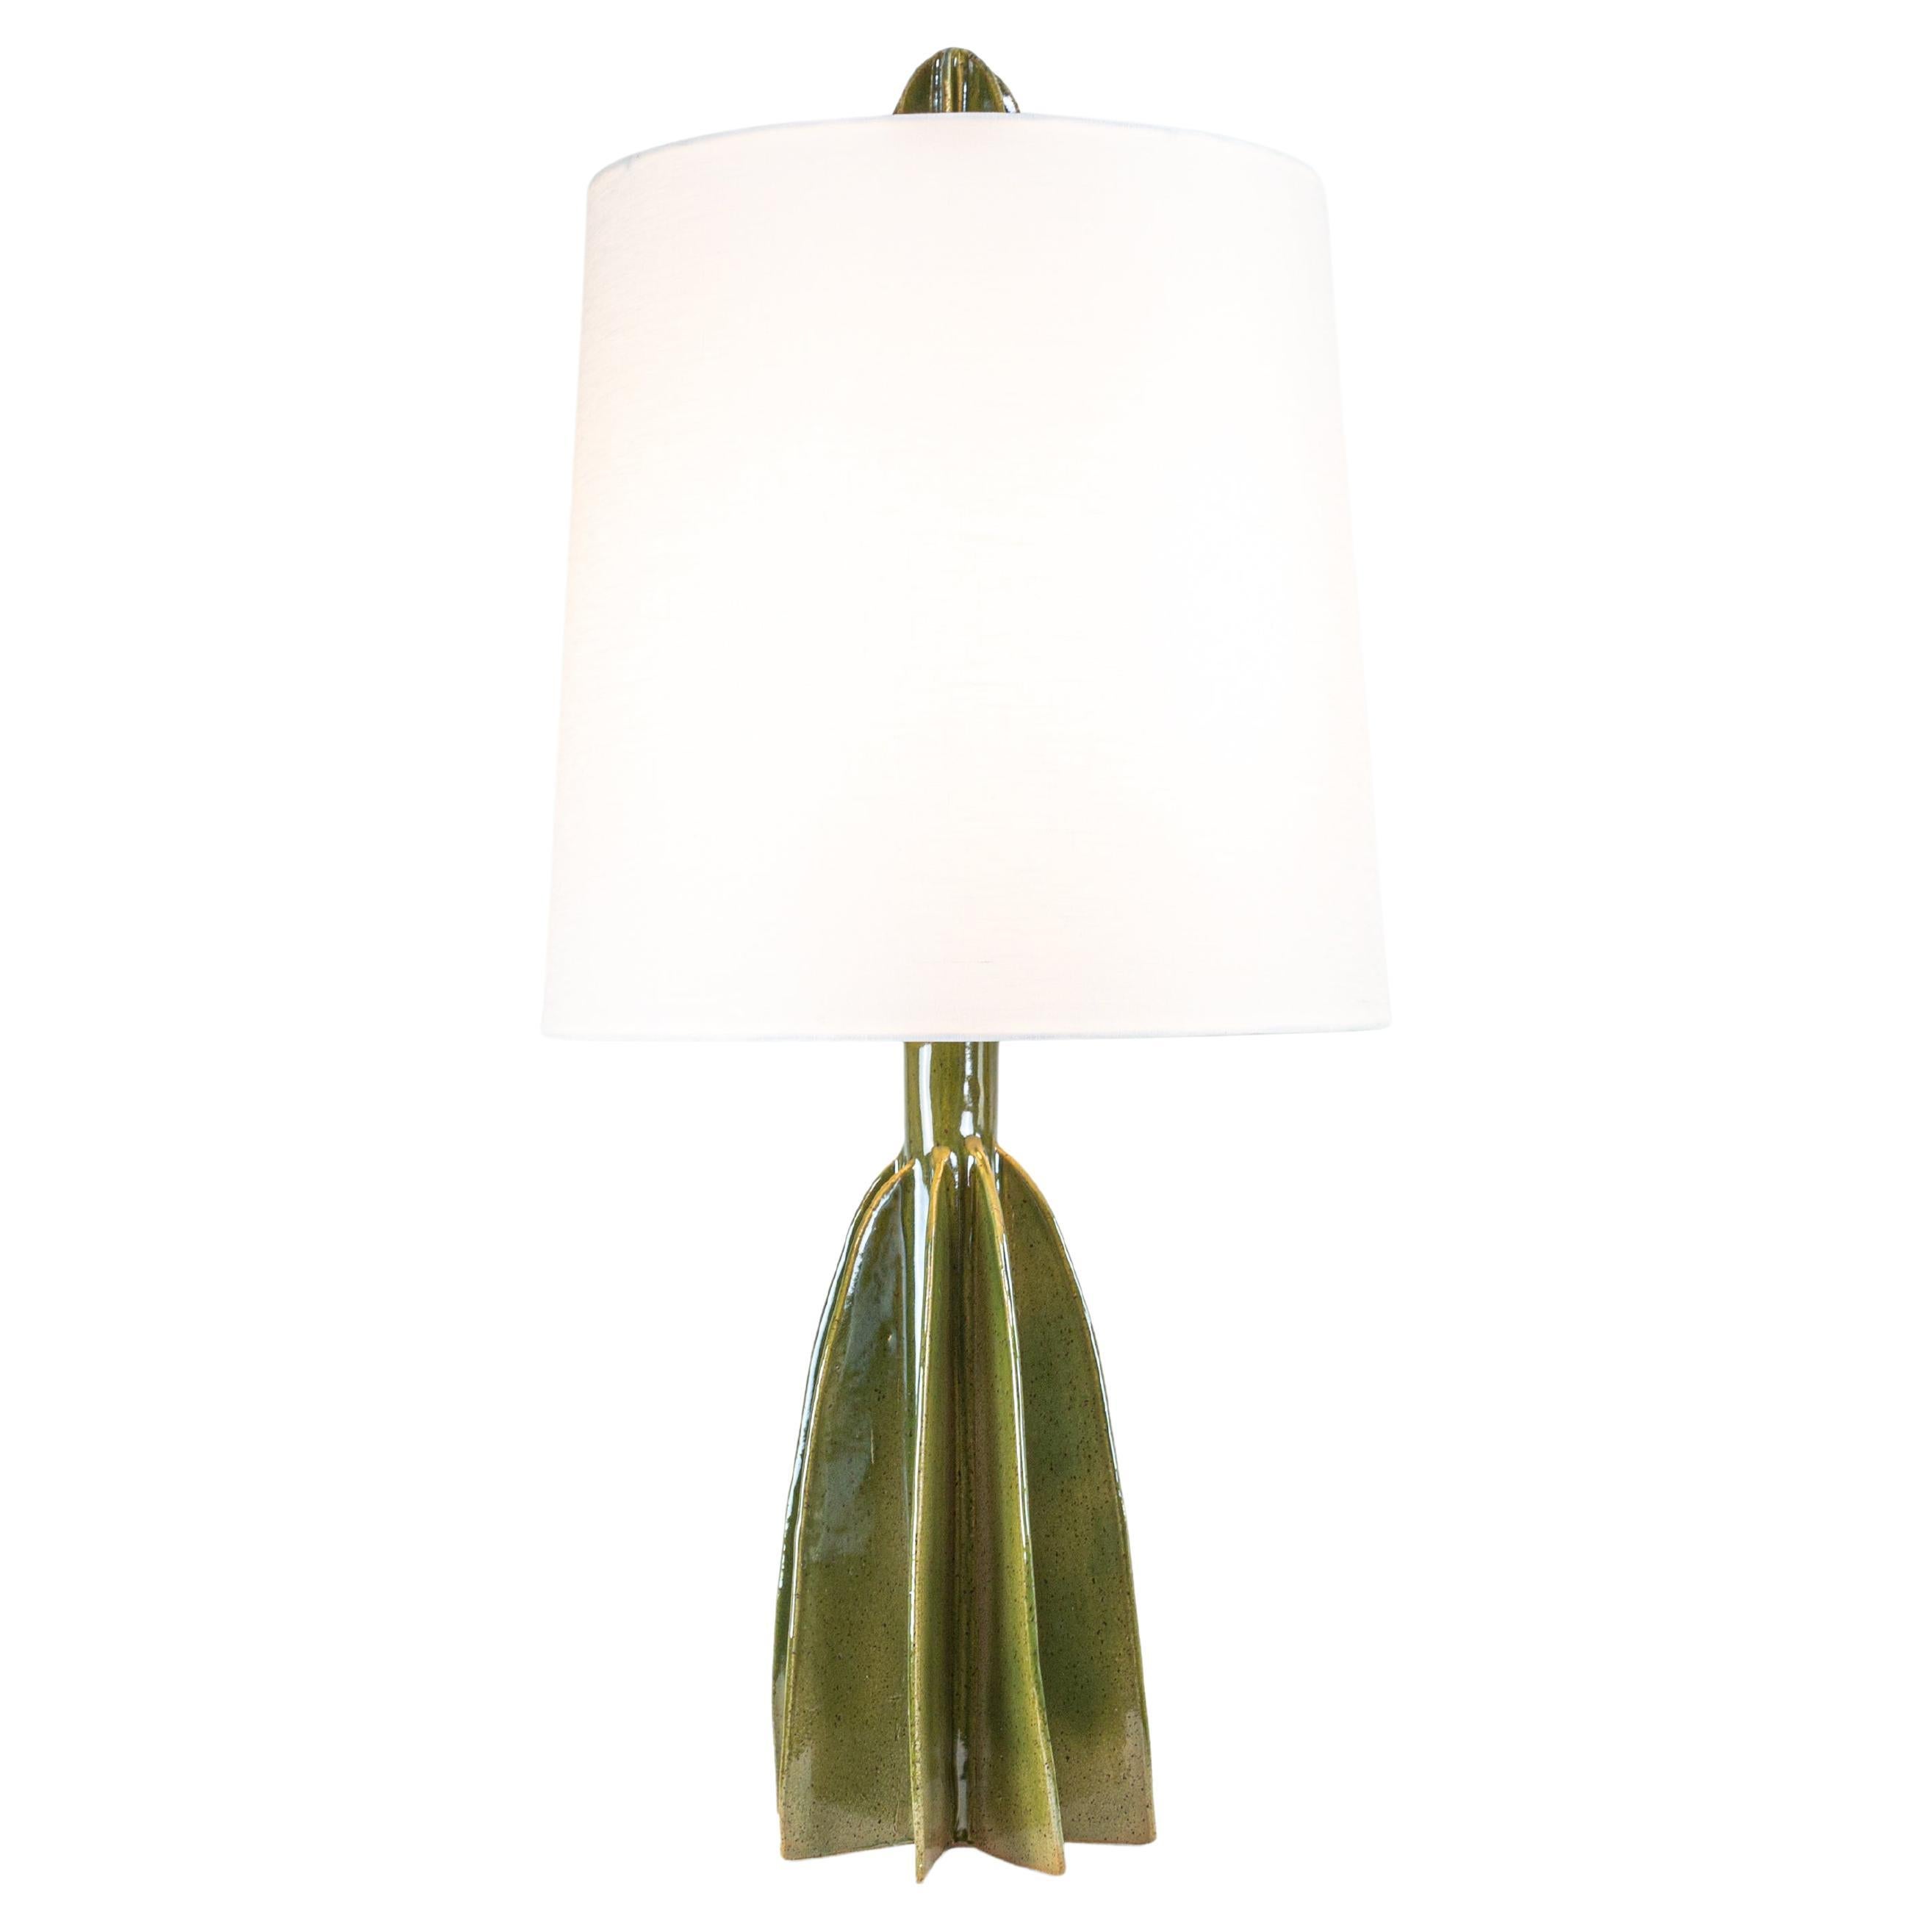 Flute Narrow Shade Table Lamp, Green Finish, hanbuilt ceramic by Kalin Asenov For Sale